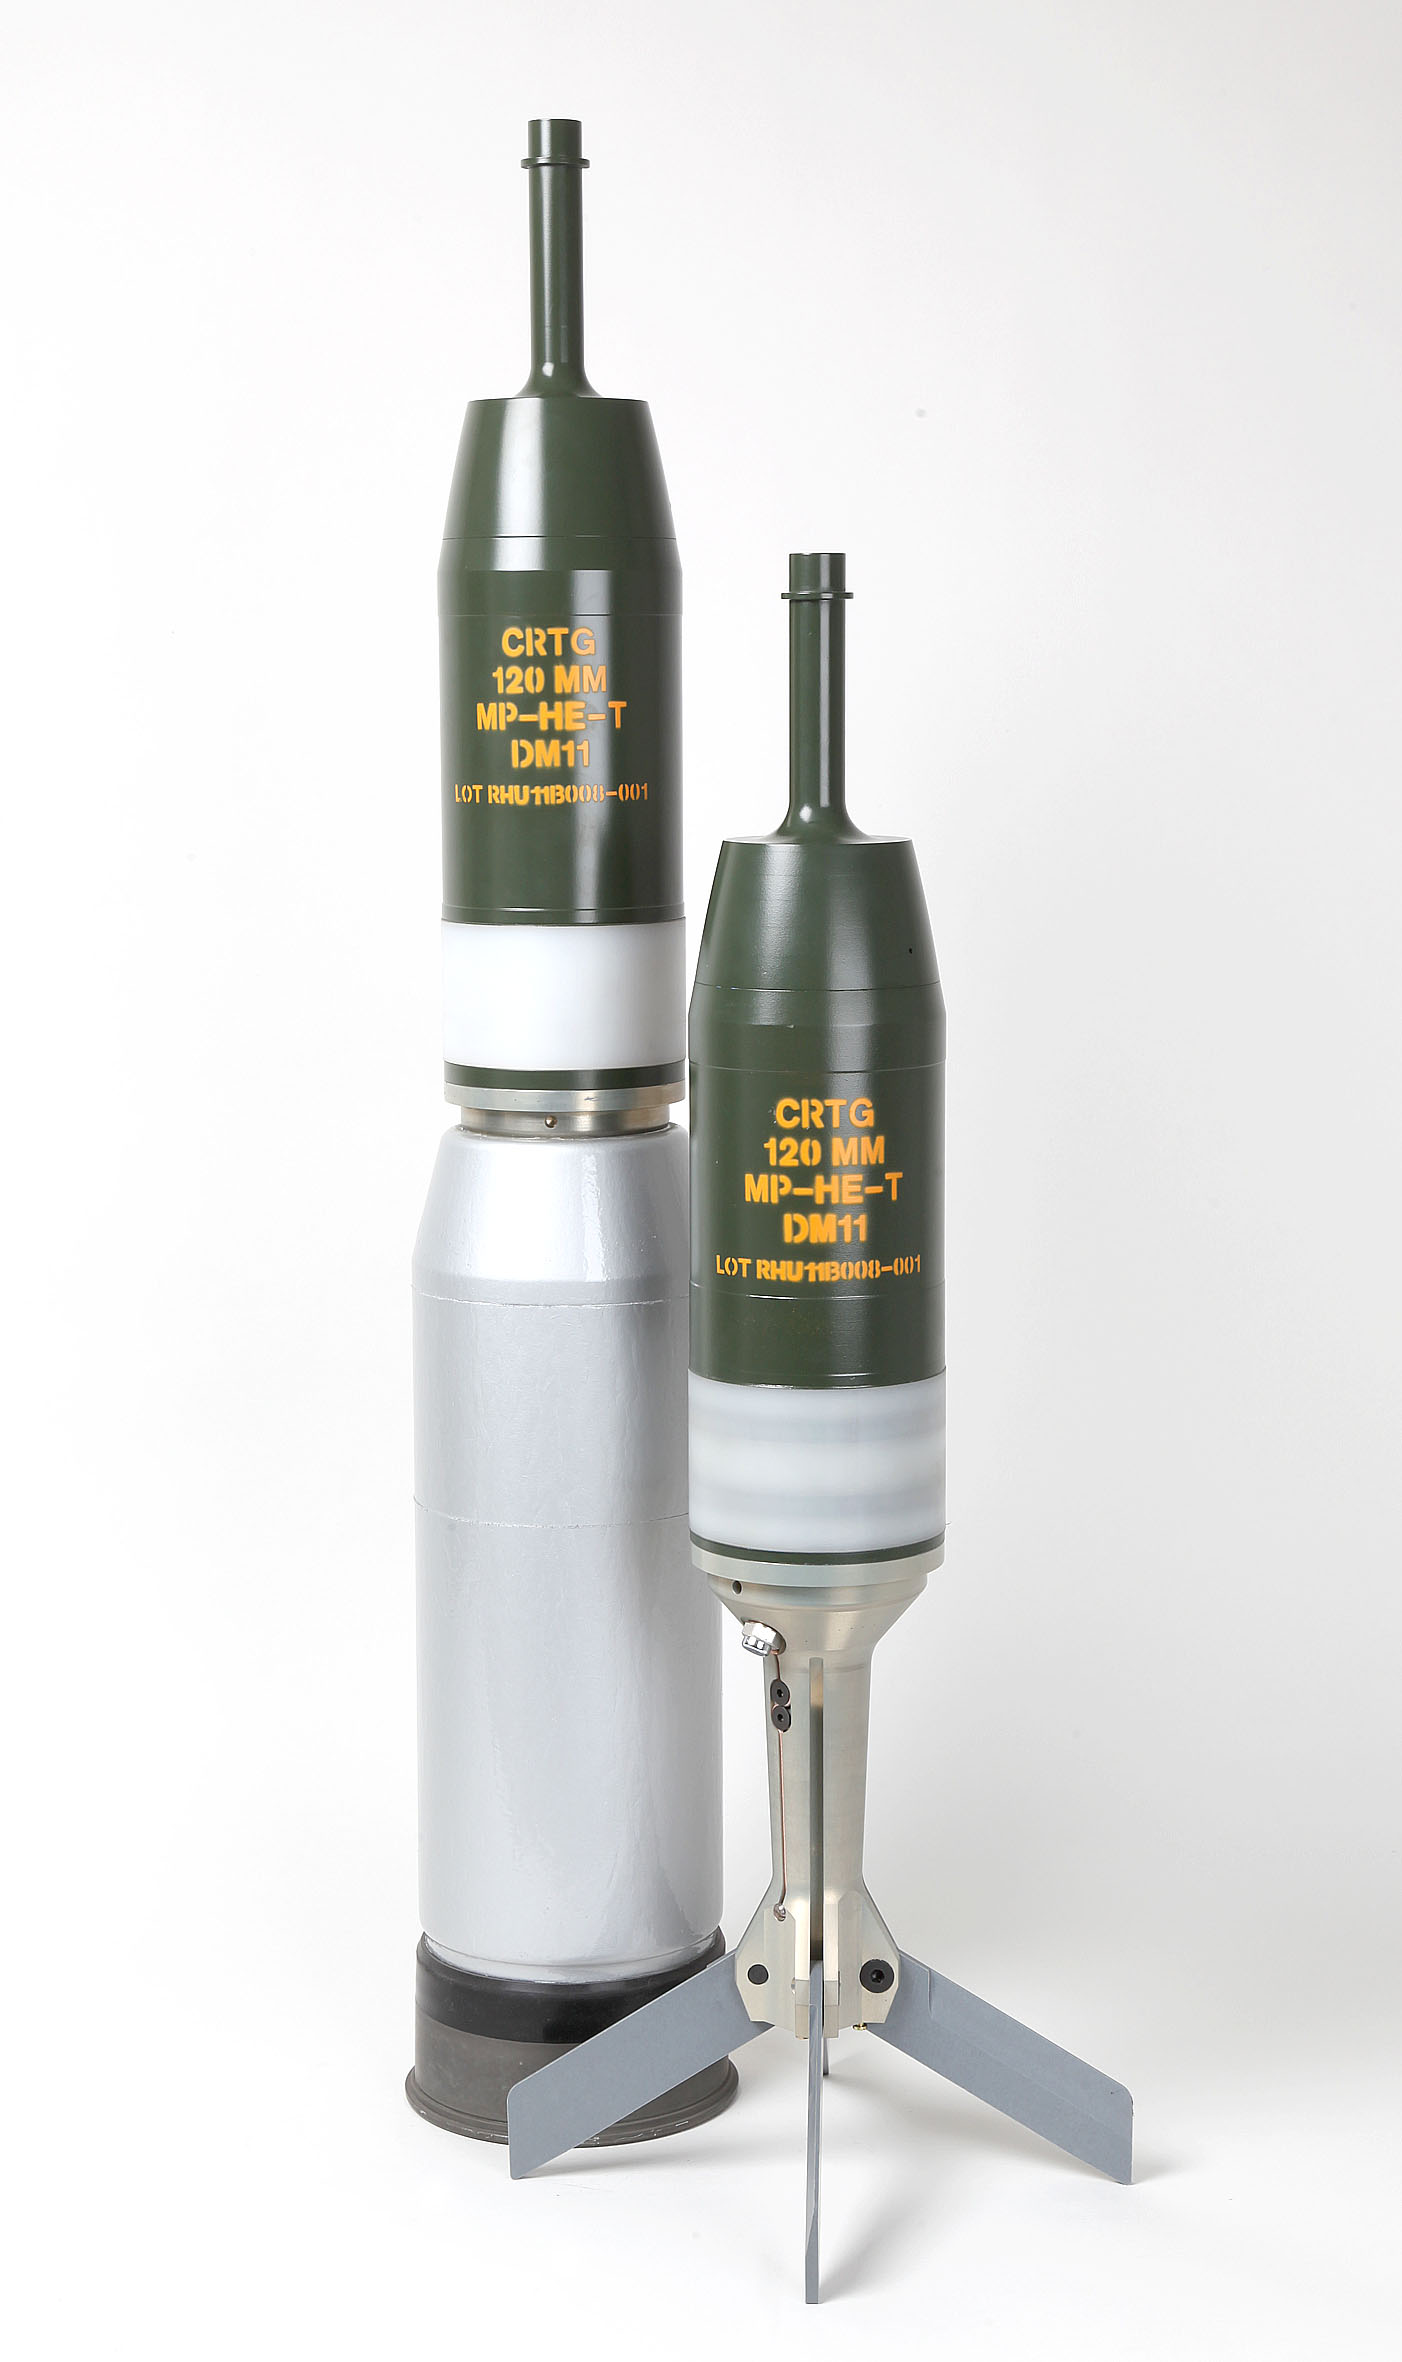 DM11 Ammunition